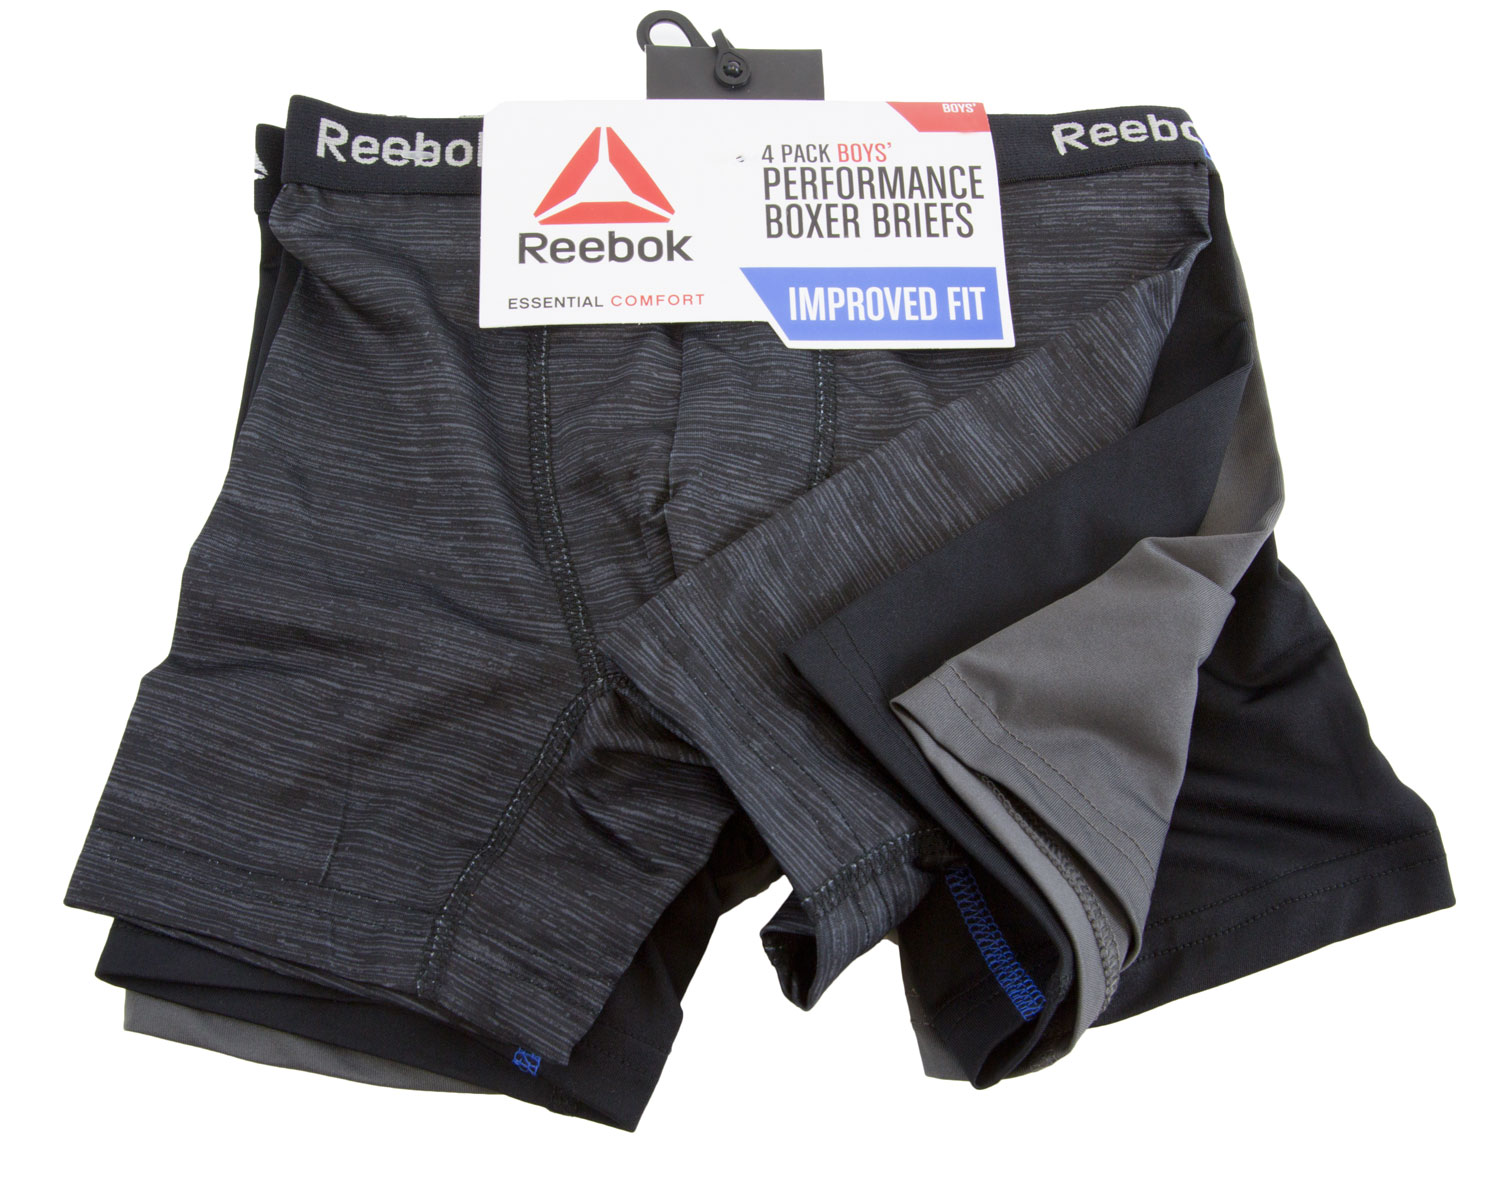 REEBOK Boy's 4 Pack Performance Boxer Briefs NEW | eBay